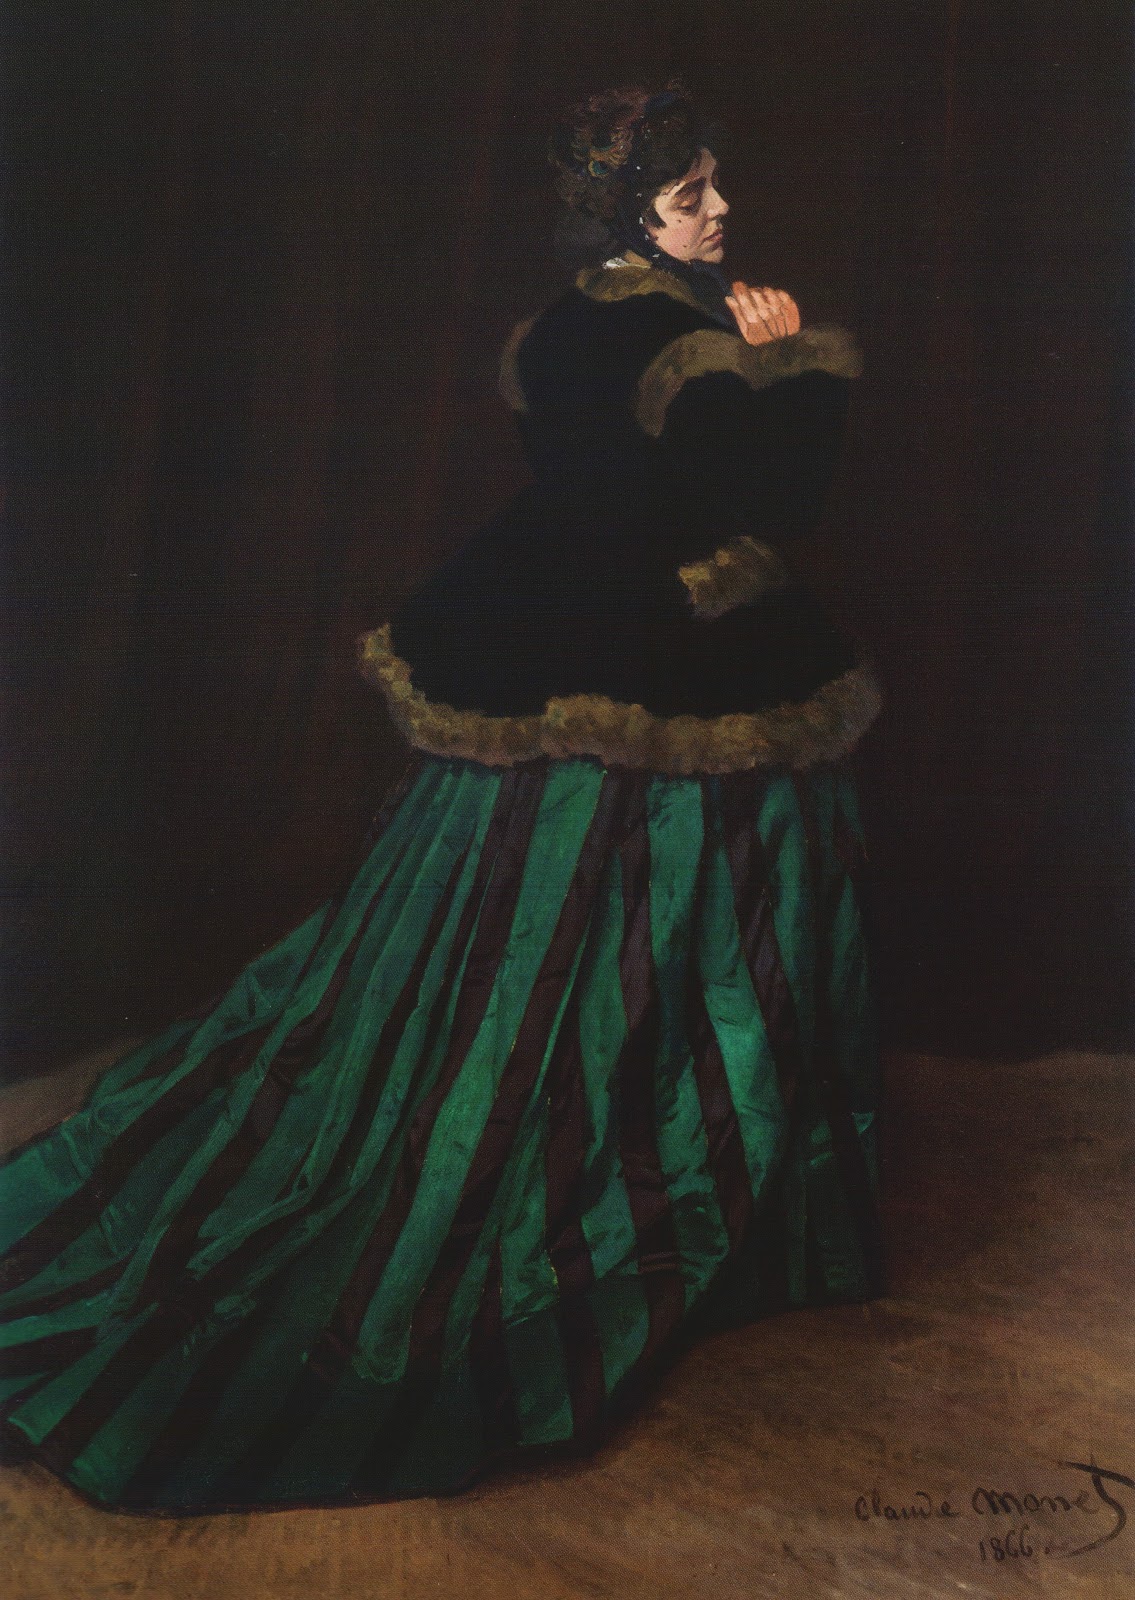 Claude+Monet-1840-1926 (153).jpg